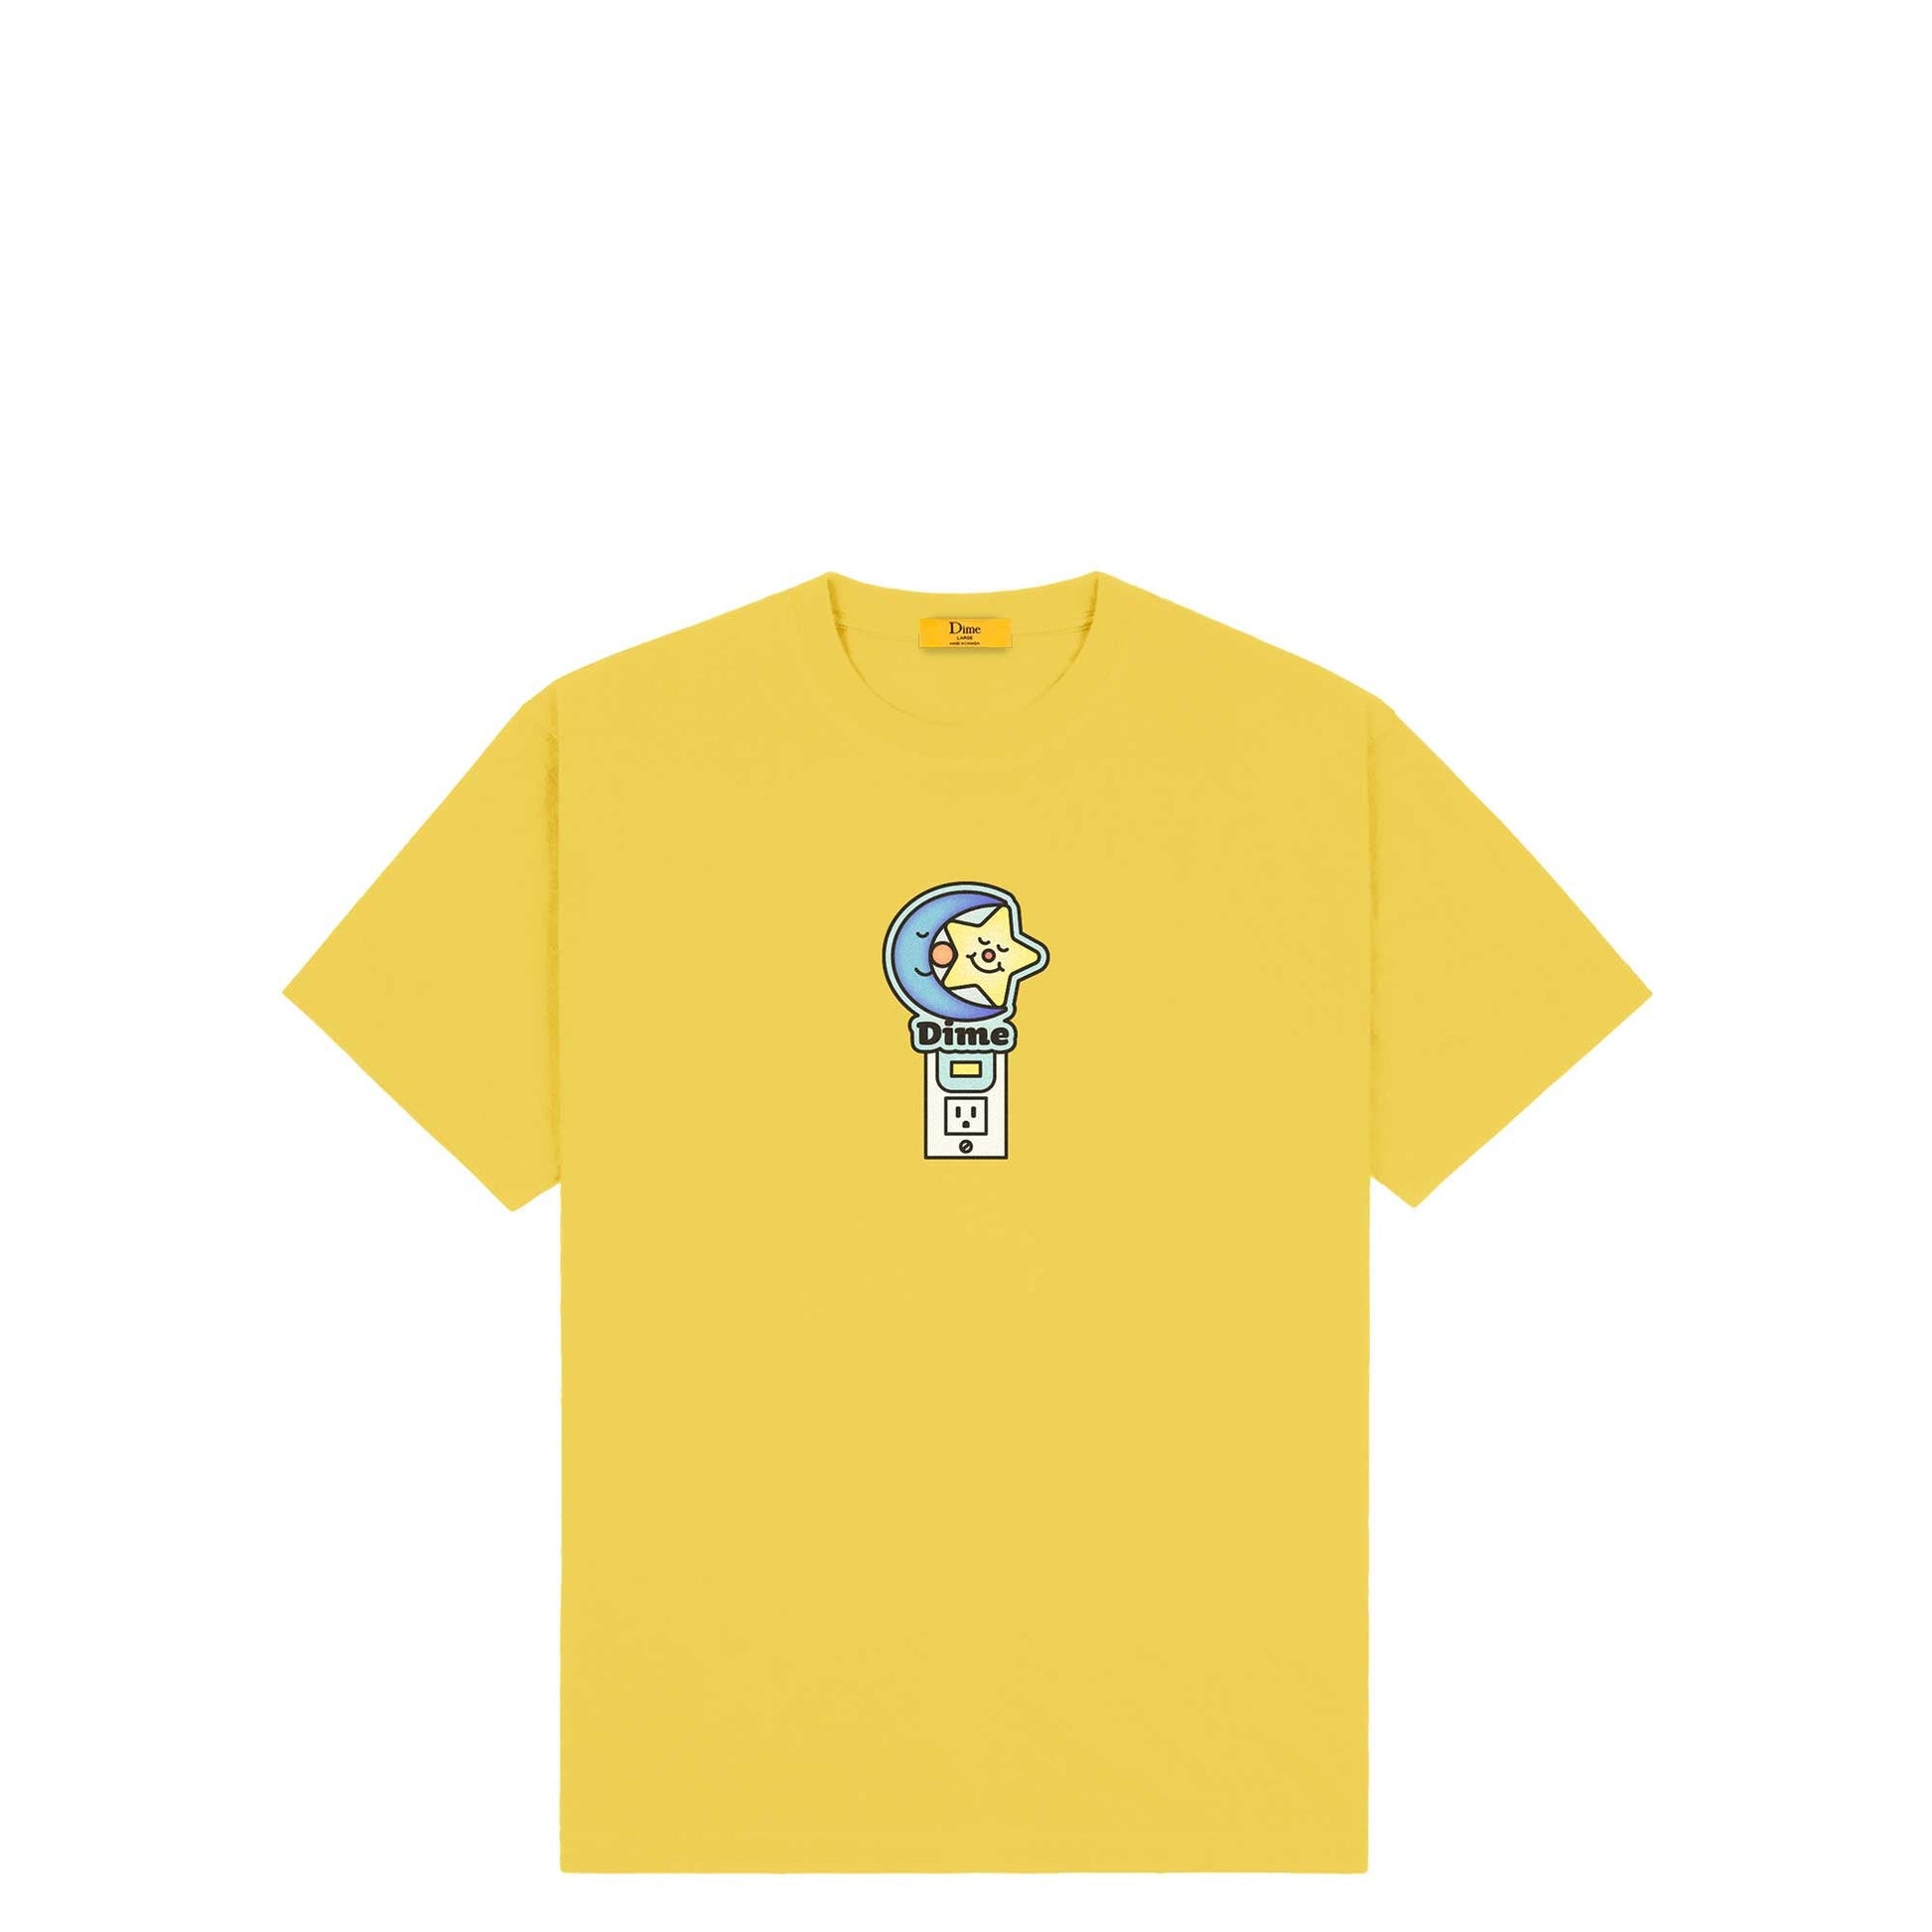 Dime Nightlight T-Shirt, lemon - Tiki Room Skateboards - 1